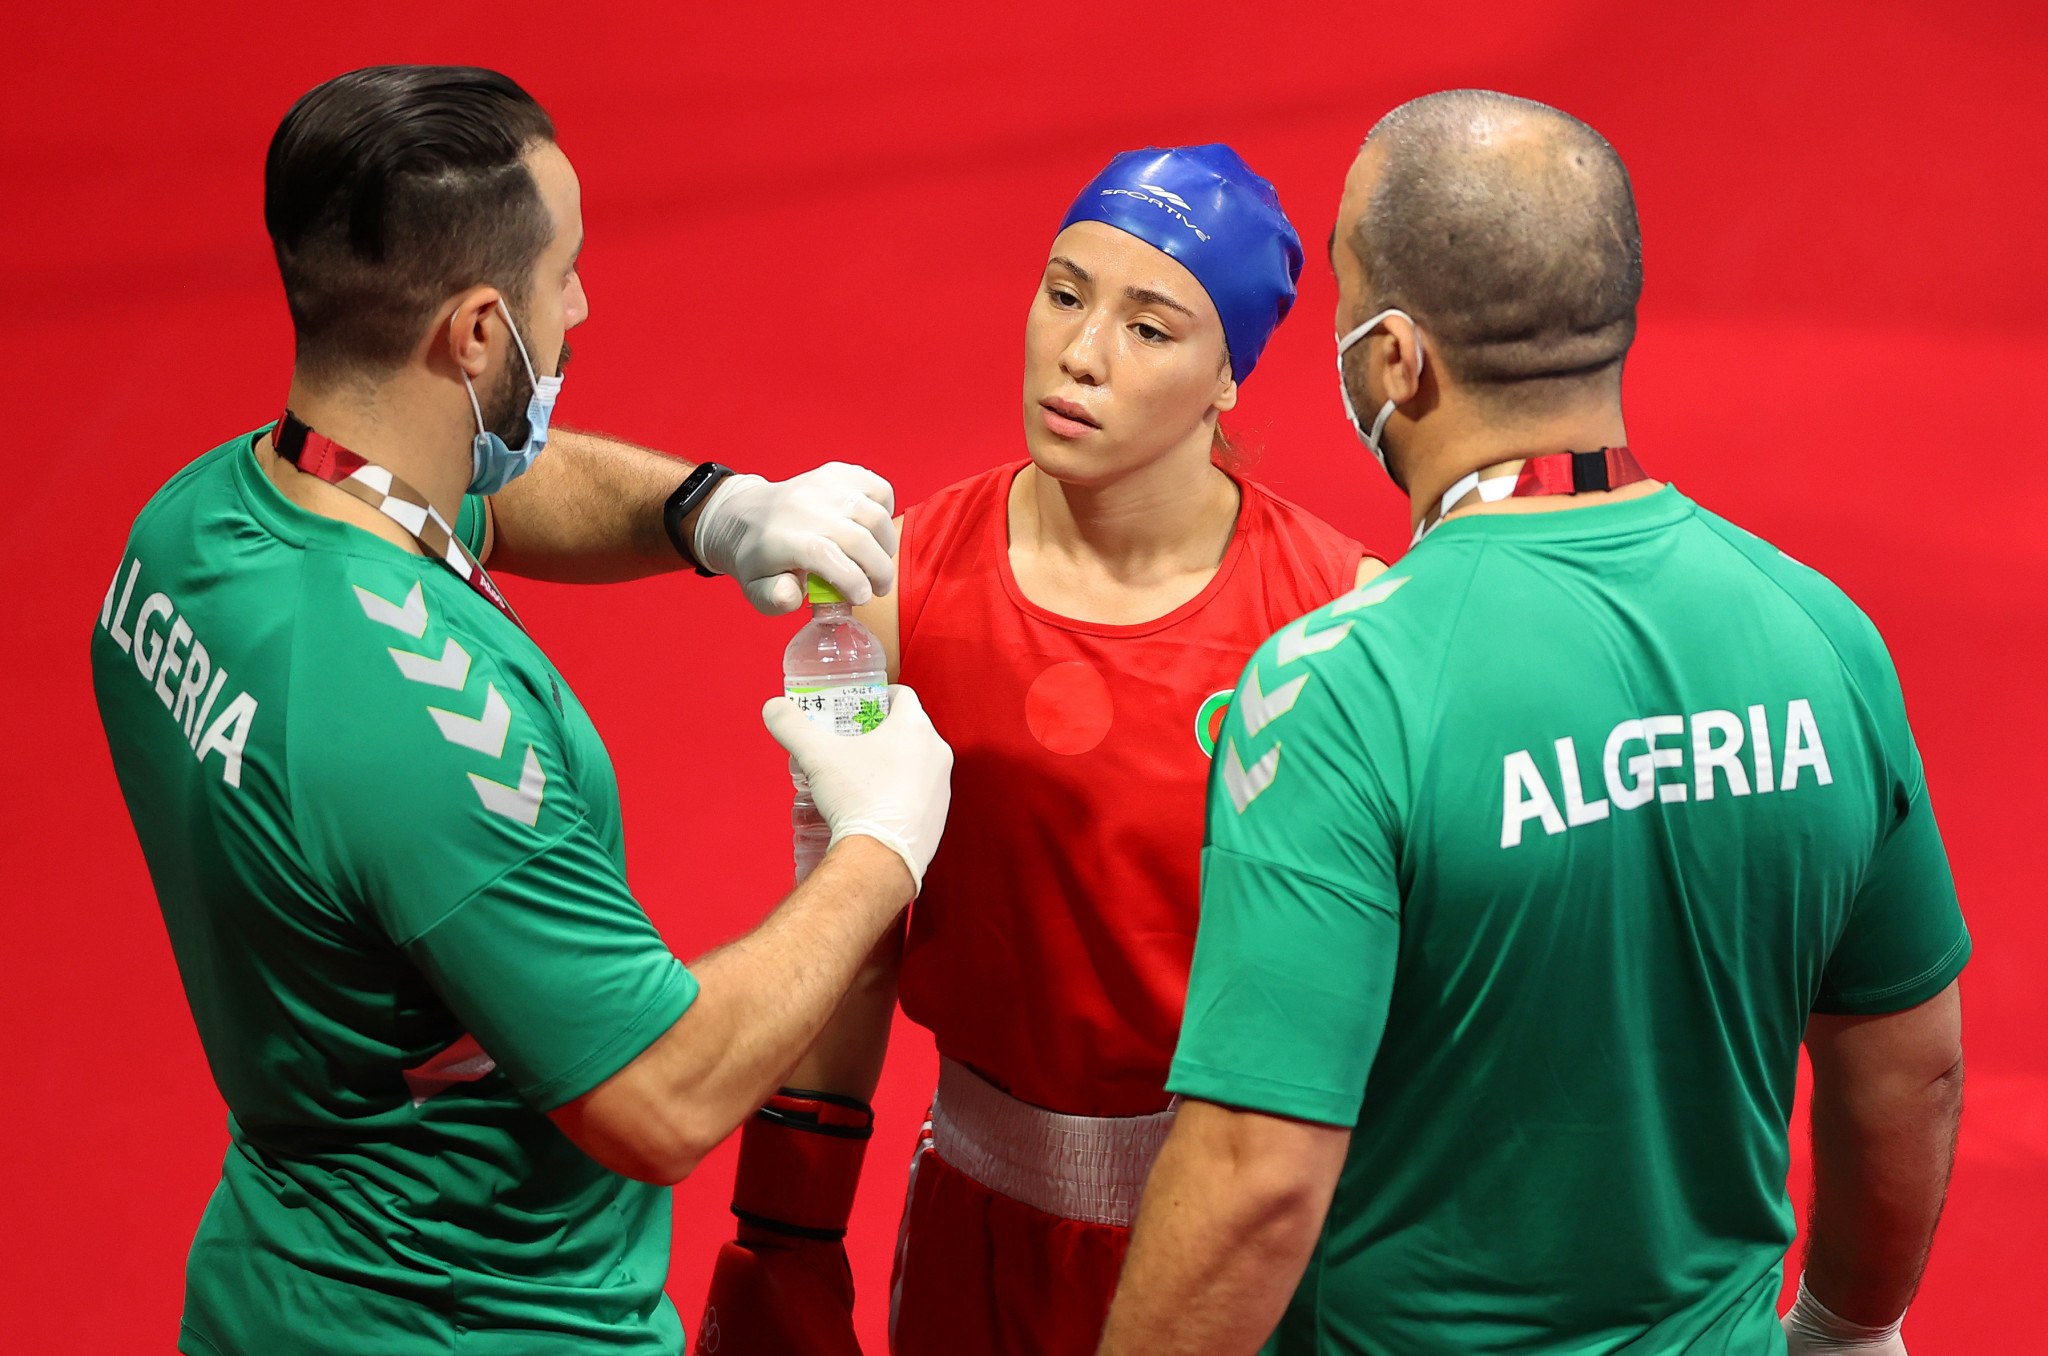 Boxing finals begin with more Algerian success at home Pan Arab Games